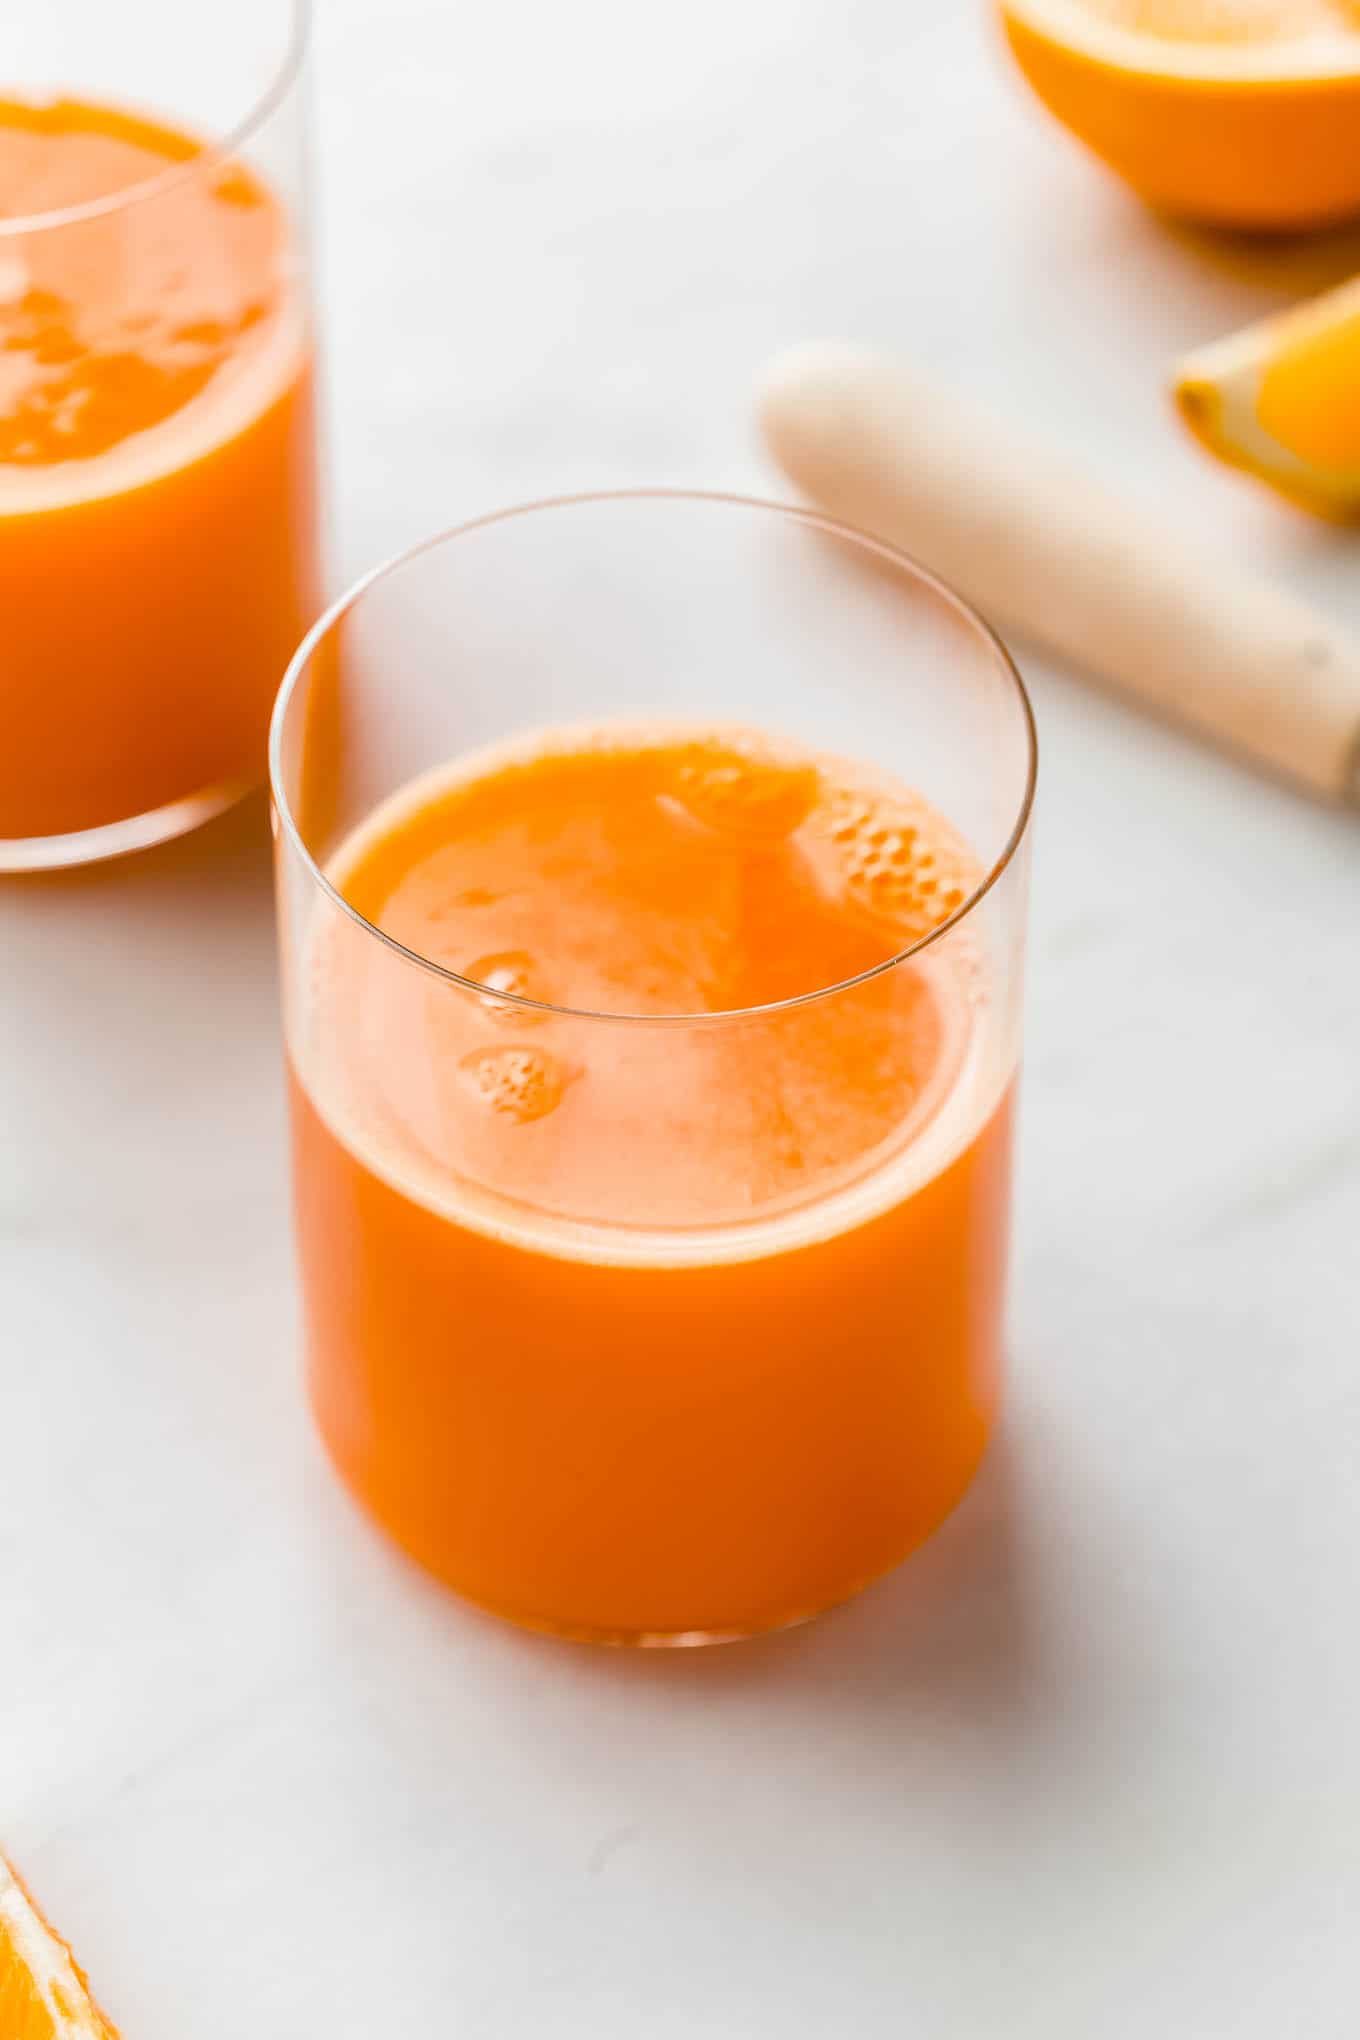 https://choosingchia.com/jessh-jessh/uploads/2021/09/immune-boosting-orange-carrot-juice-9.jpg